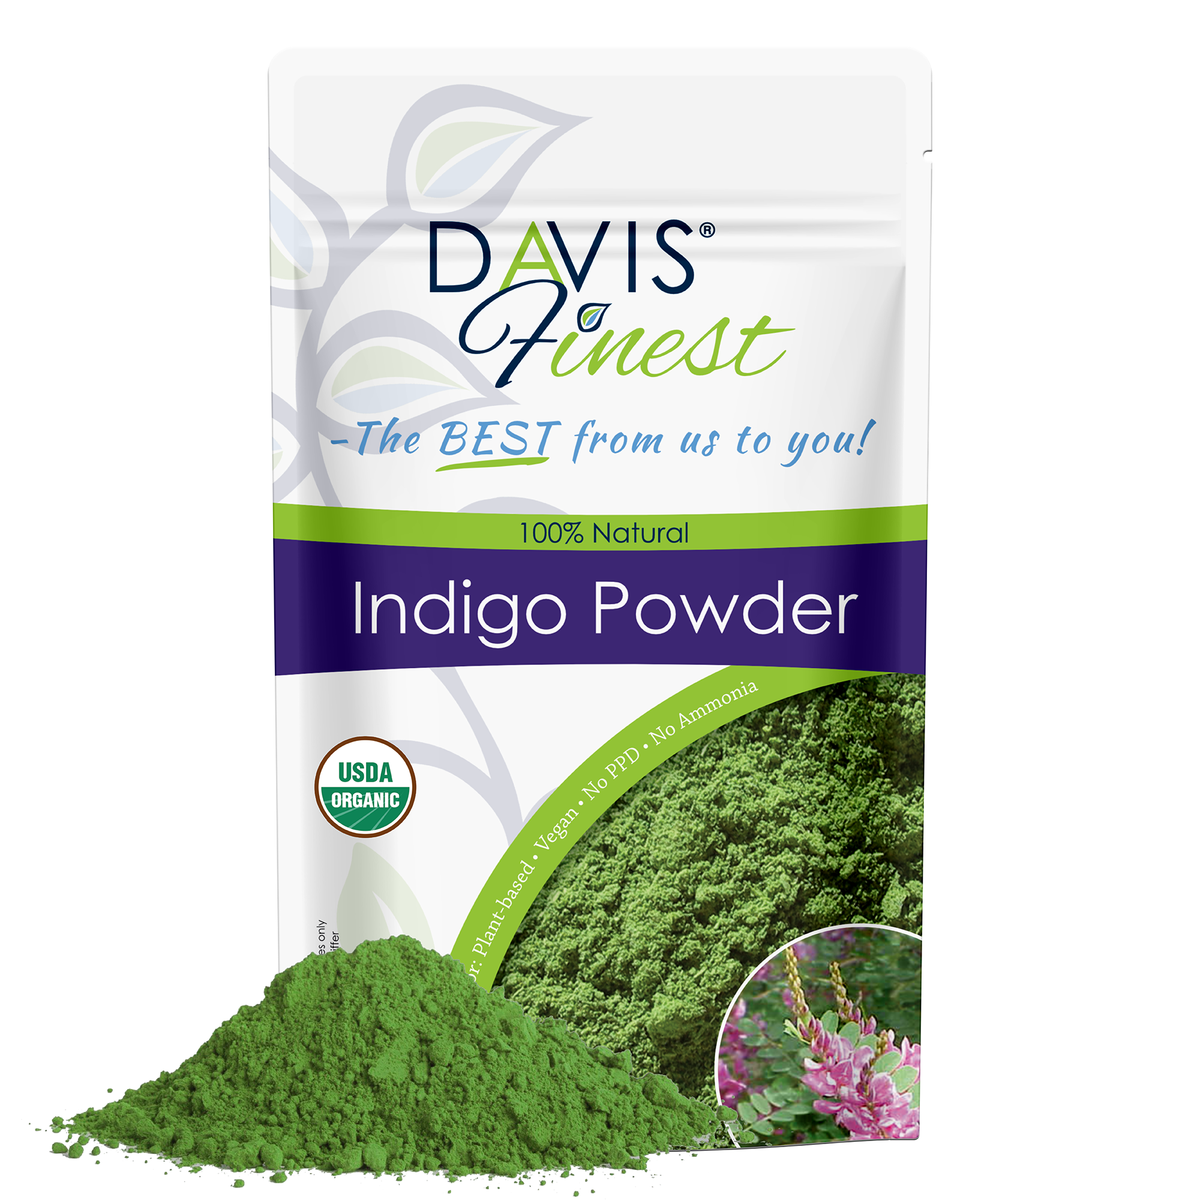 Indigo Powder Hair Dye